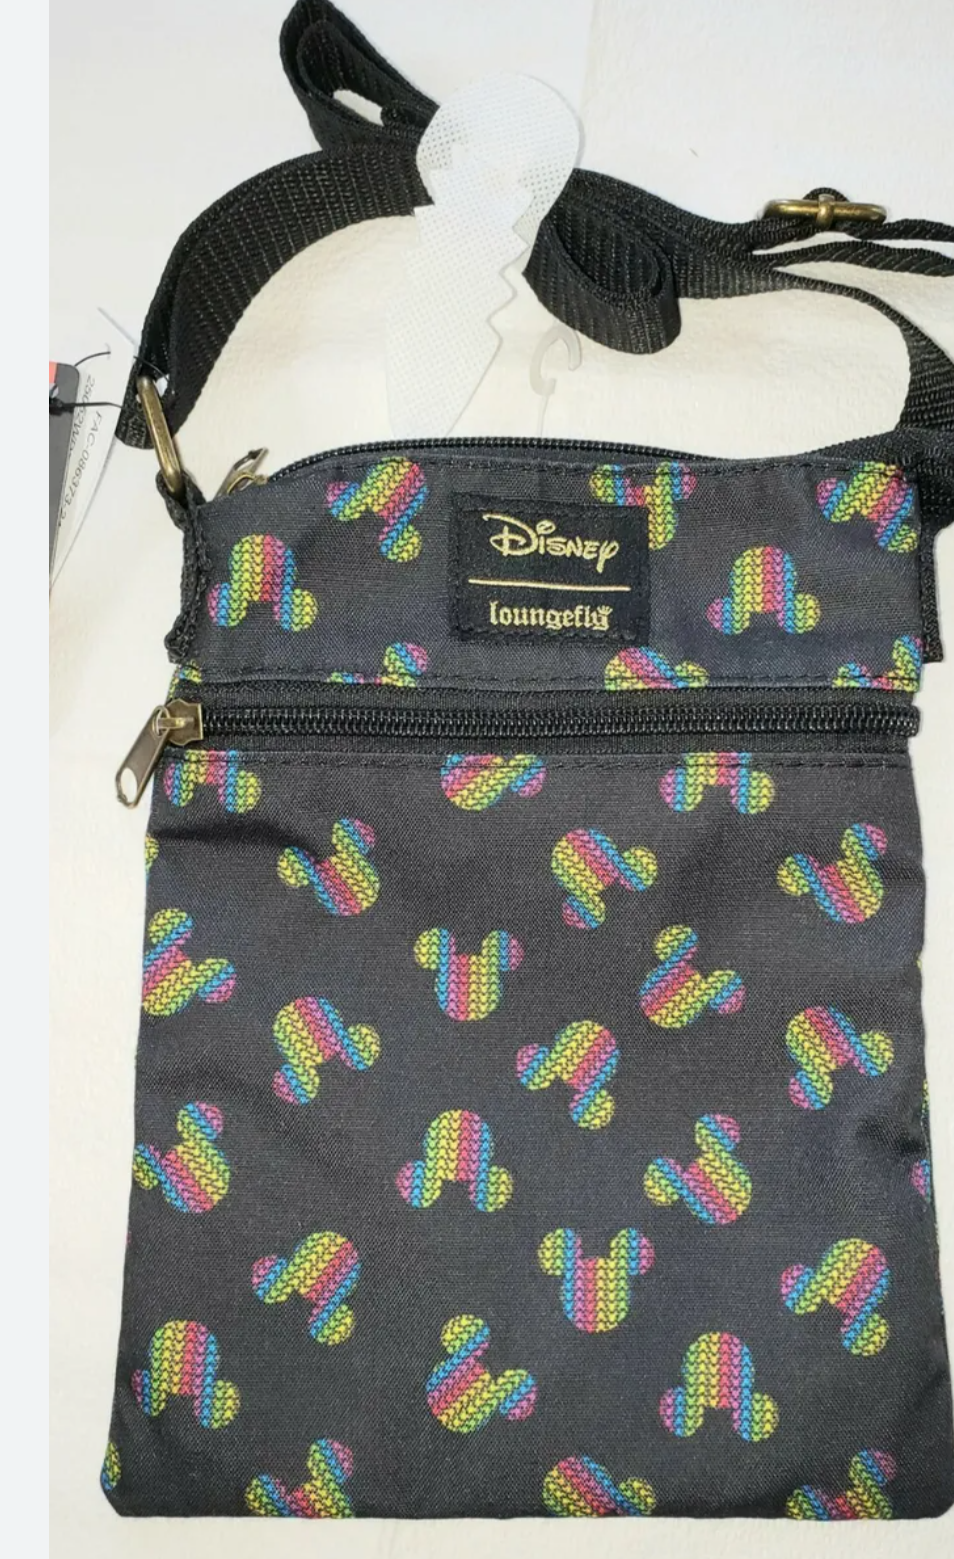 Loungefly Disney Mickey Mouse Rainbow Passport Cross Body Bag Purse